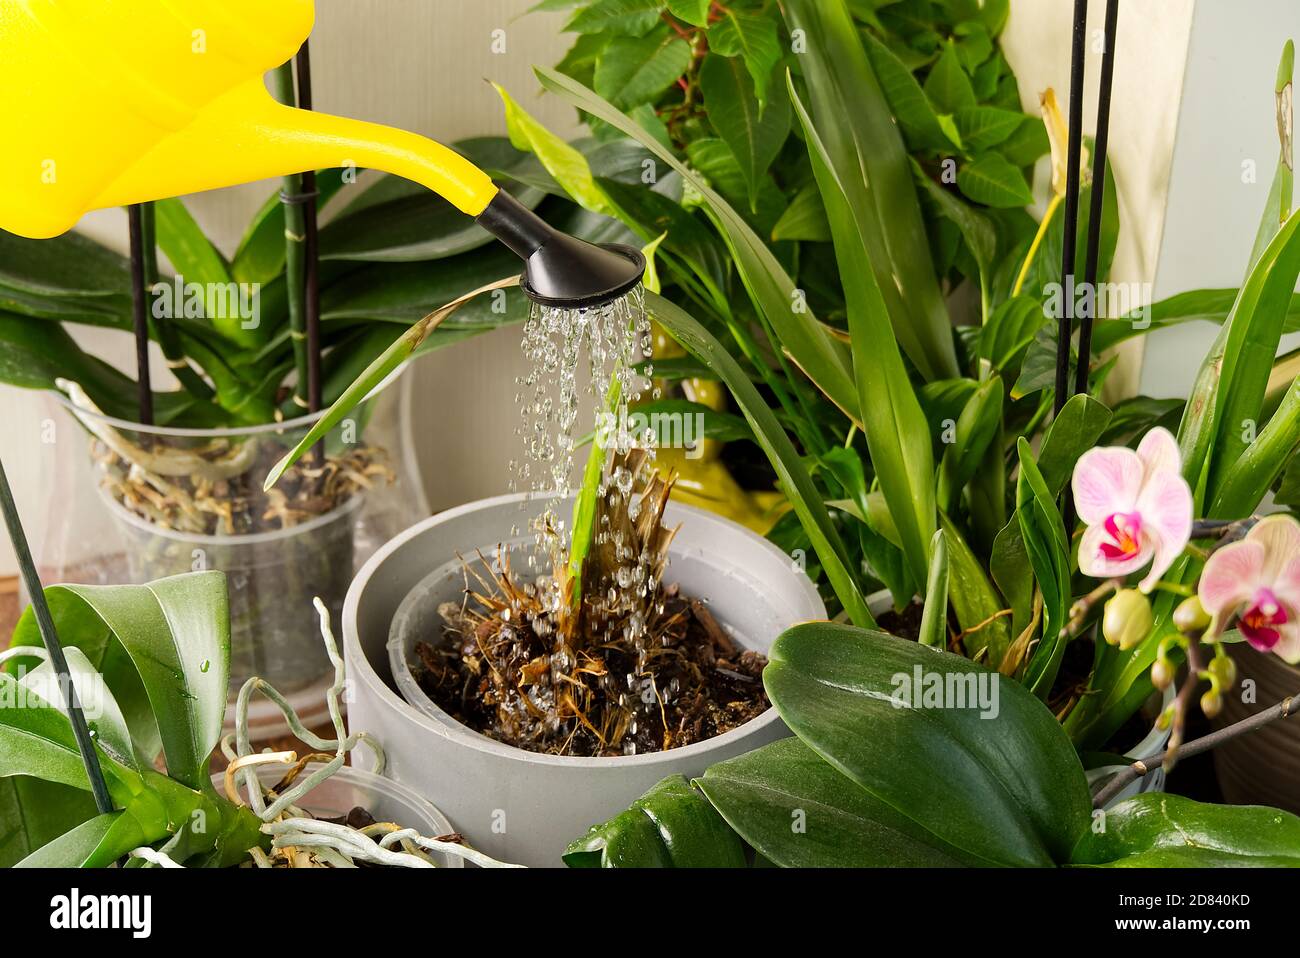 Riego de orquídeas fotografías e imágenes de alta resolución - Alamy